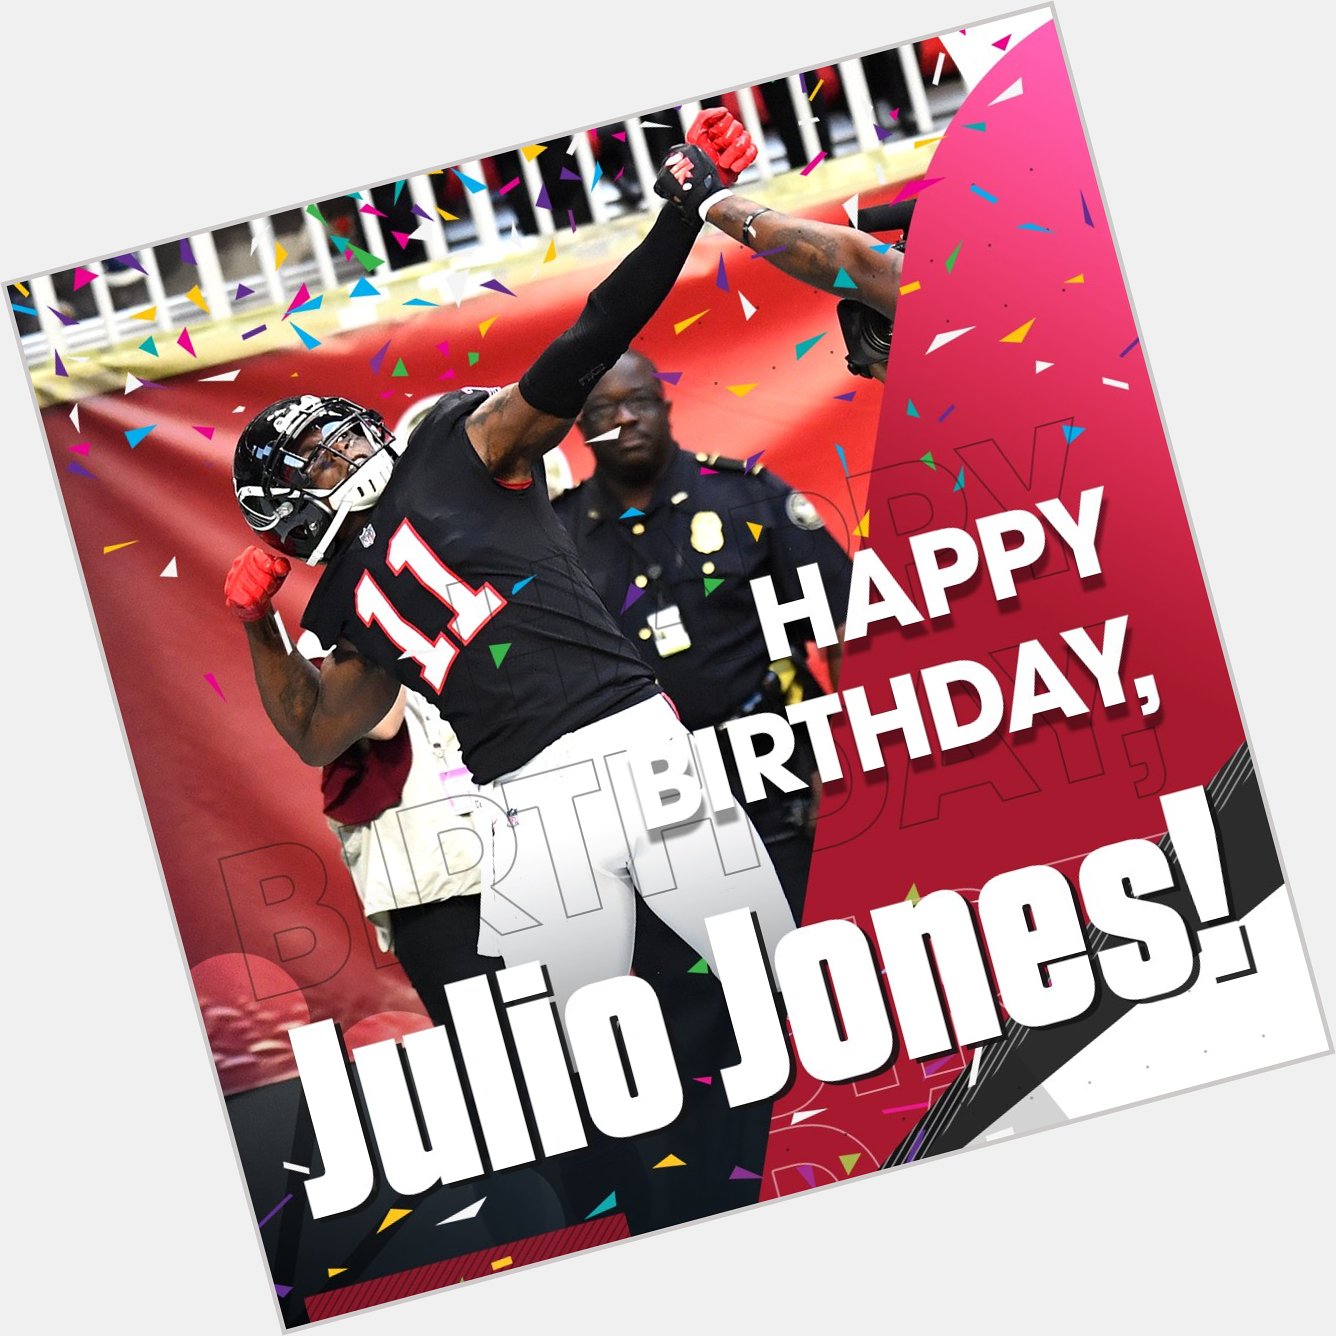 Join us in wishing Julio Jones a happy 30th birthday! 